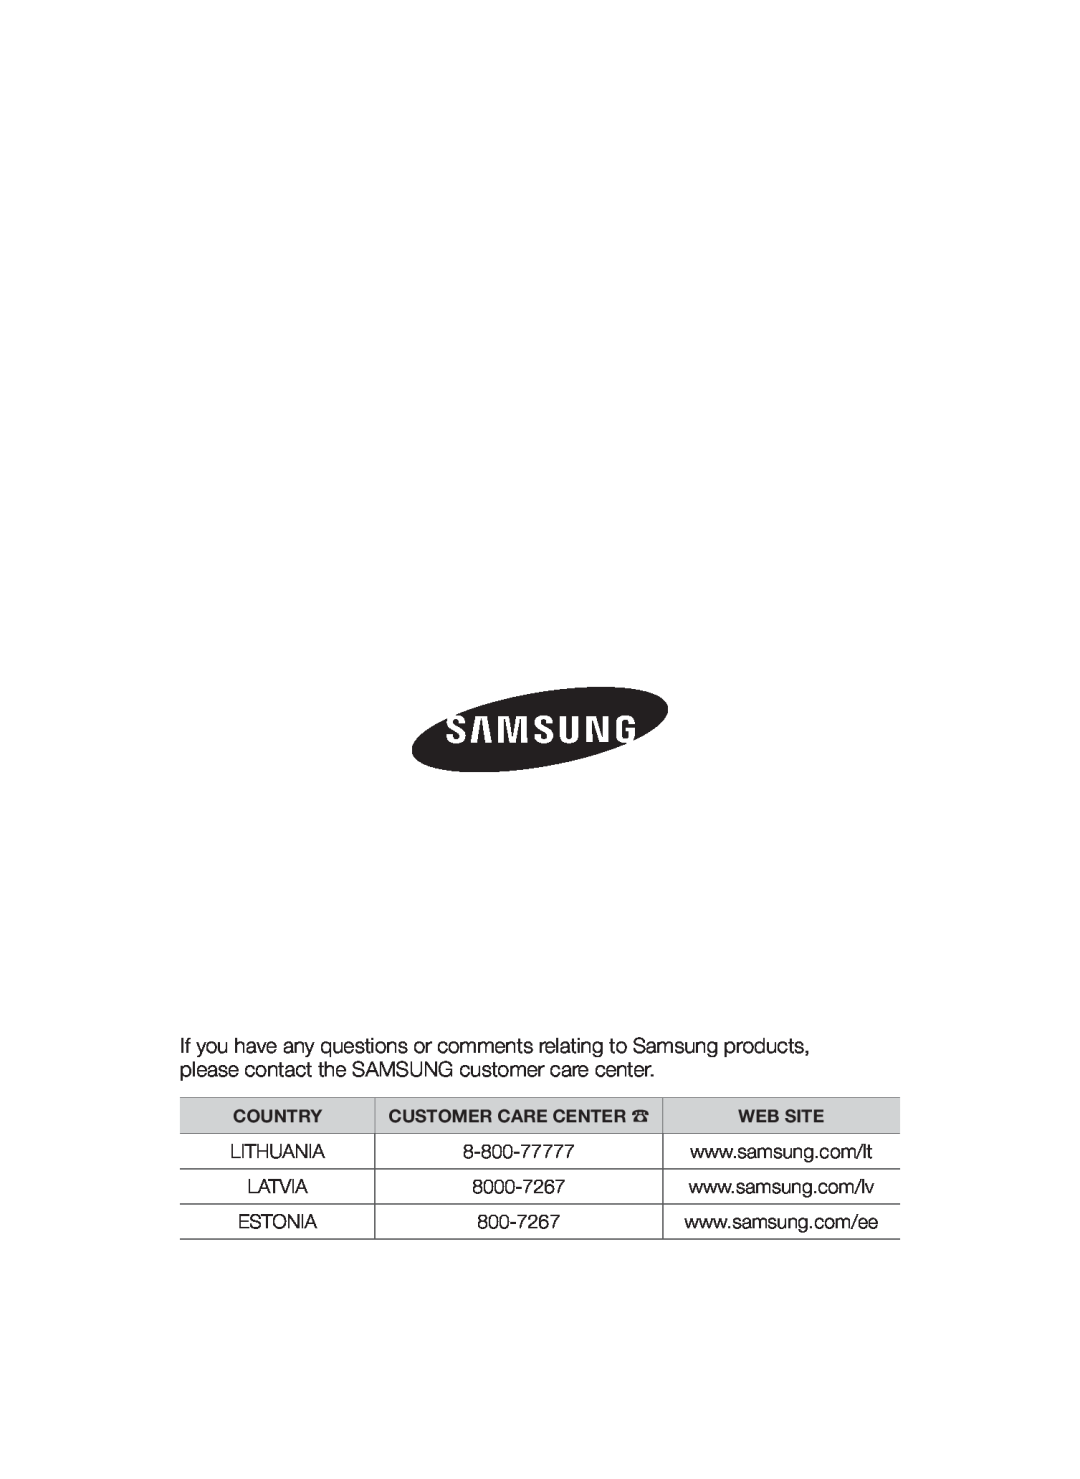 Samsung VCC45S0S3R/XEN manual Country, Customer Care Center, Web Site, Lithuania, 8-800-77777, Latvia, 8000-7267, Estonia 